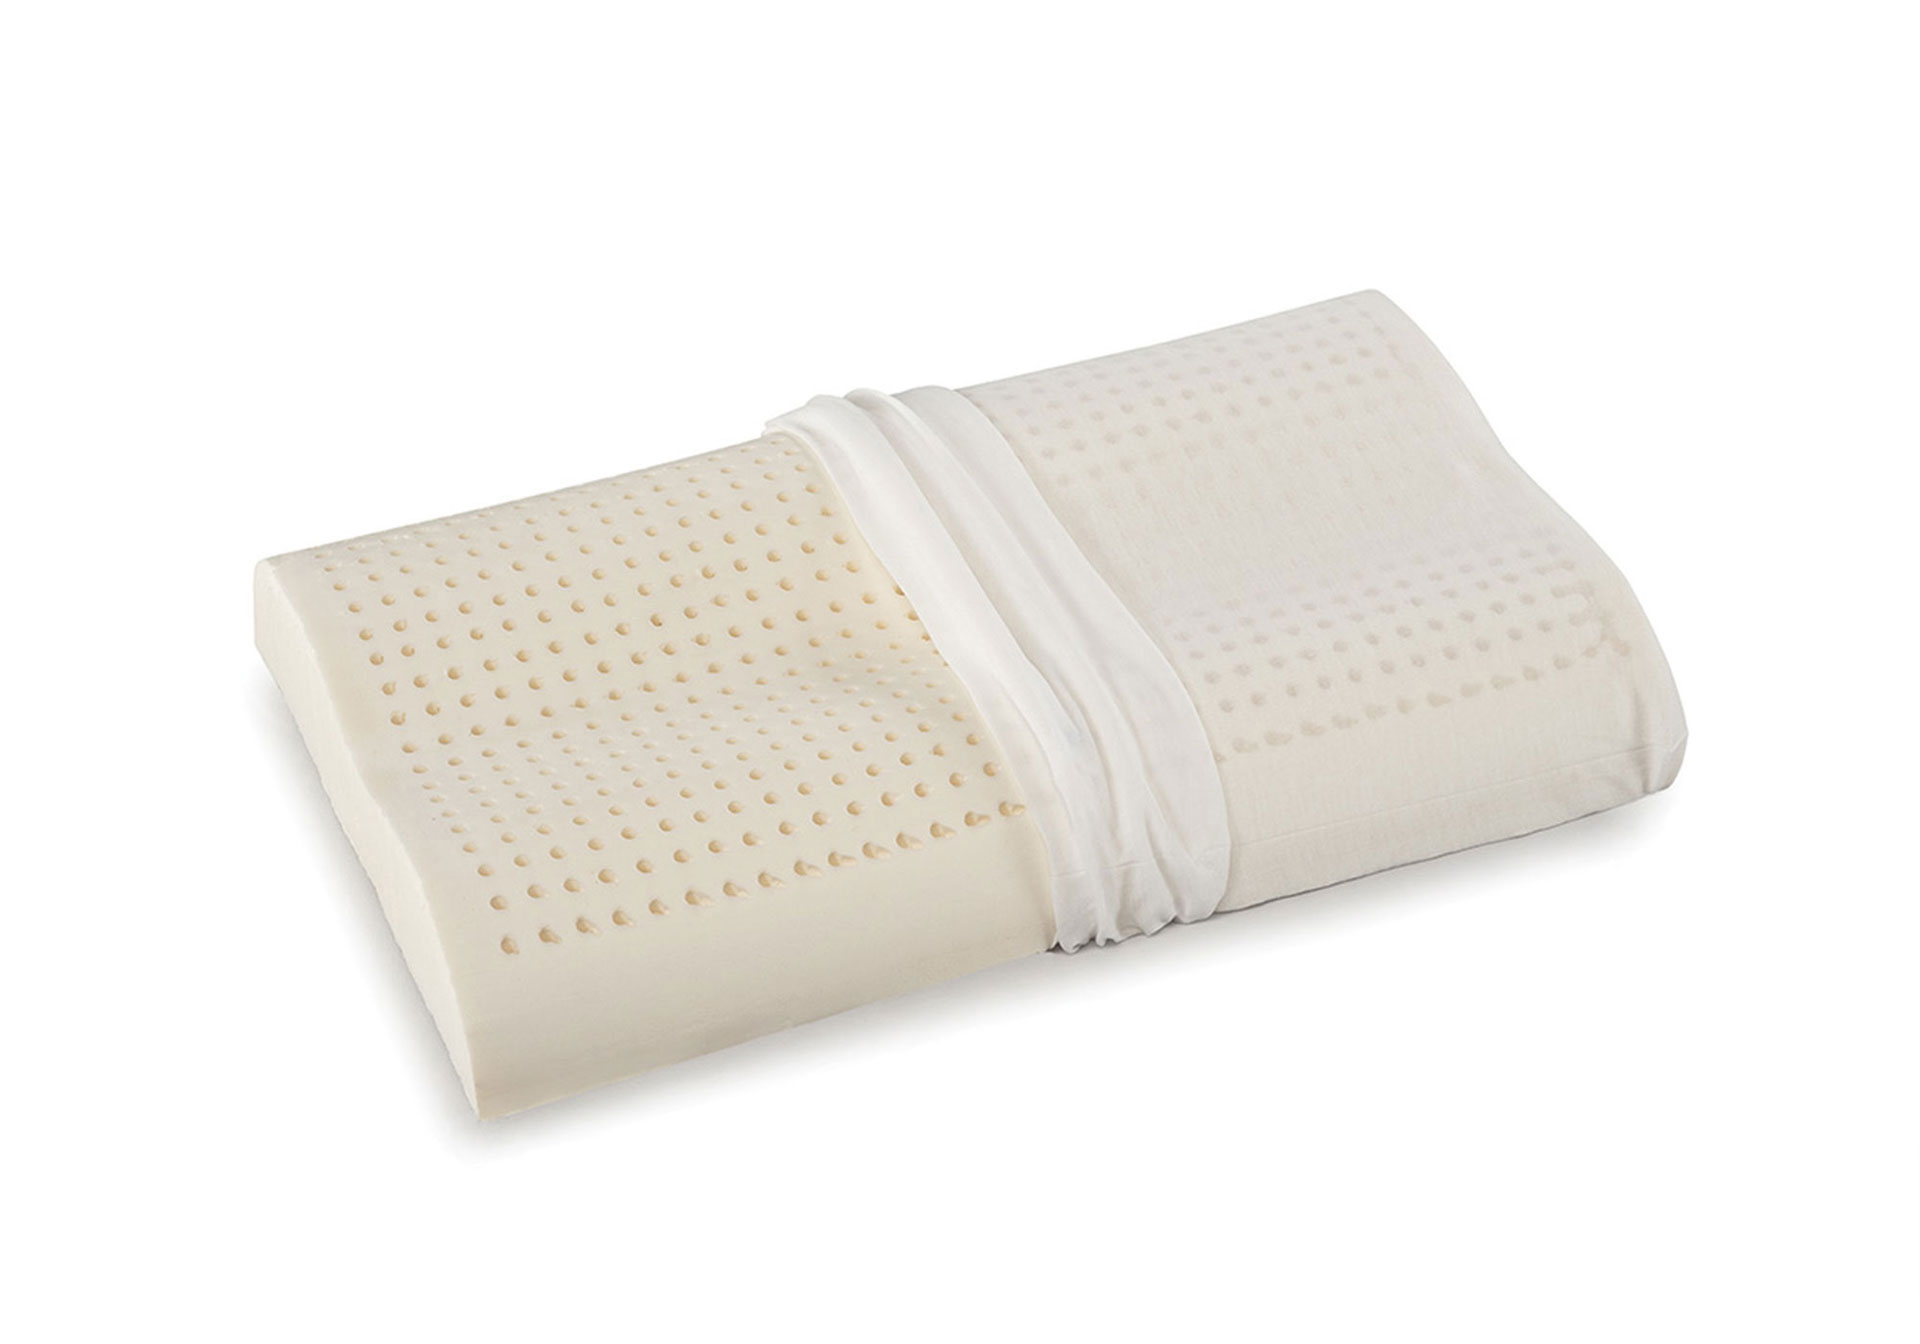 Linea Accessori Guanciali - Guanciale Memory - Guanciale Lattice - Guanciale Piume  il viscoelastico materassi materassi materassi 